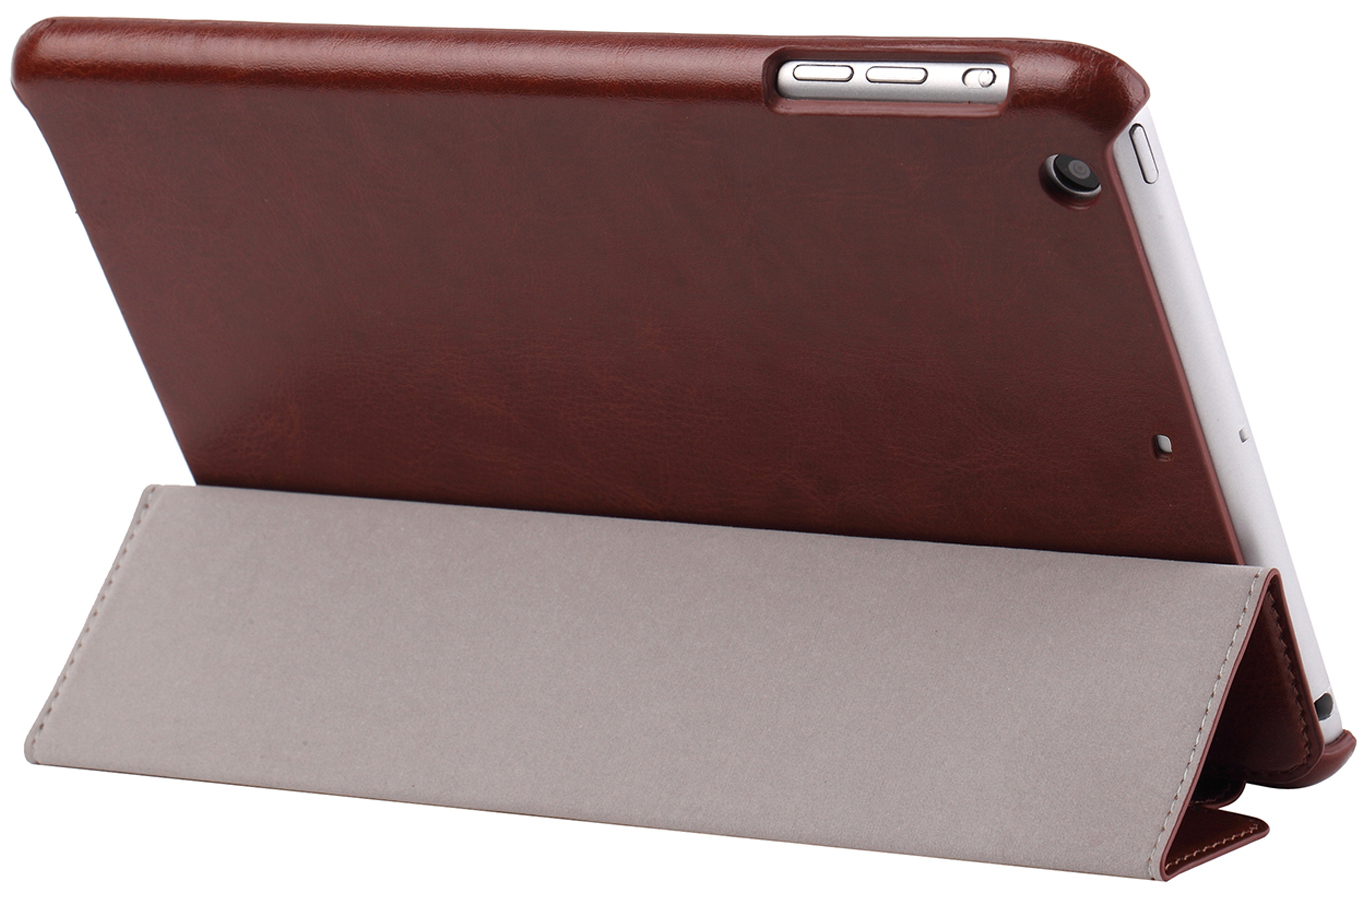  G-Case Slim Premium для iPad iPad mini 3 Brown